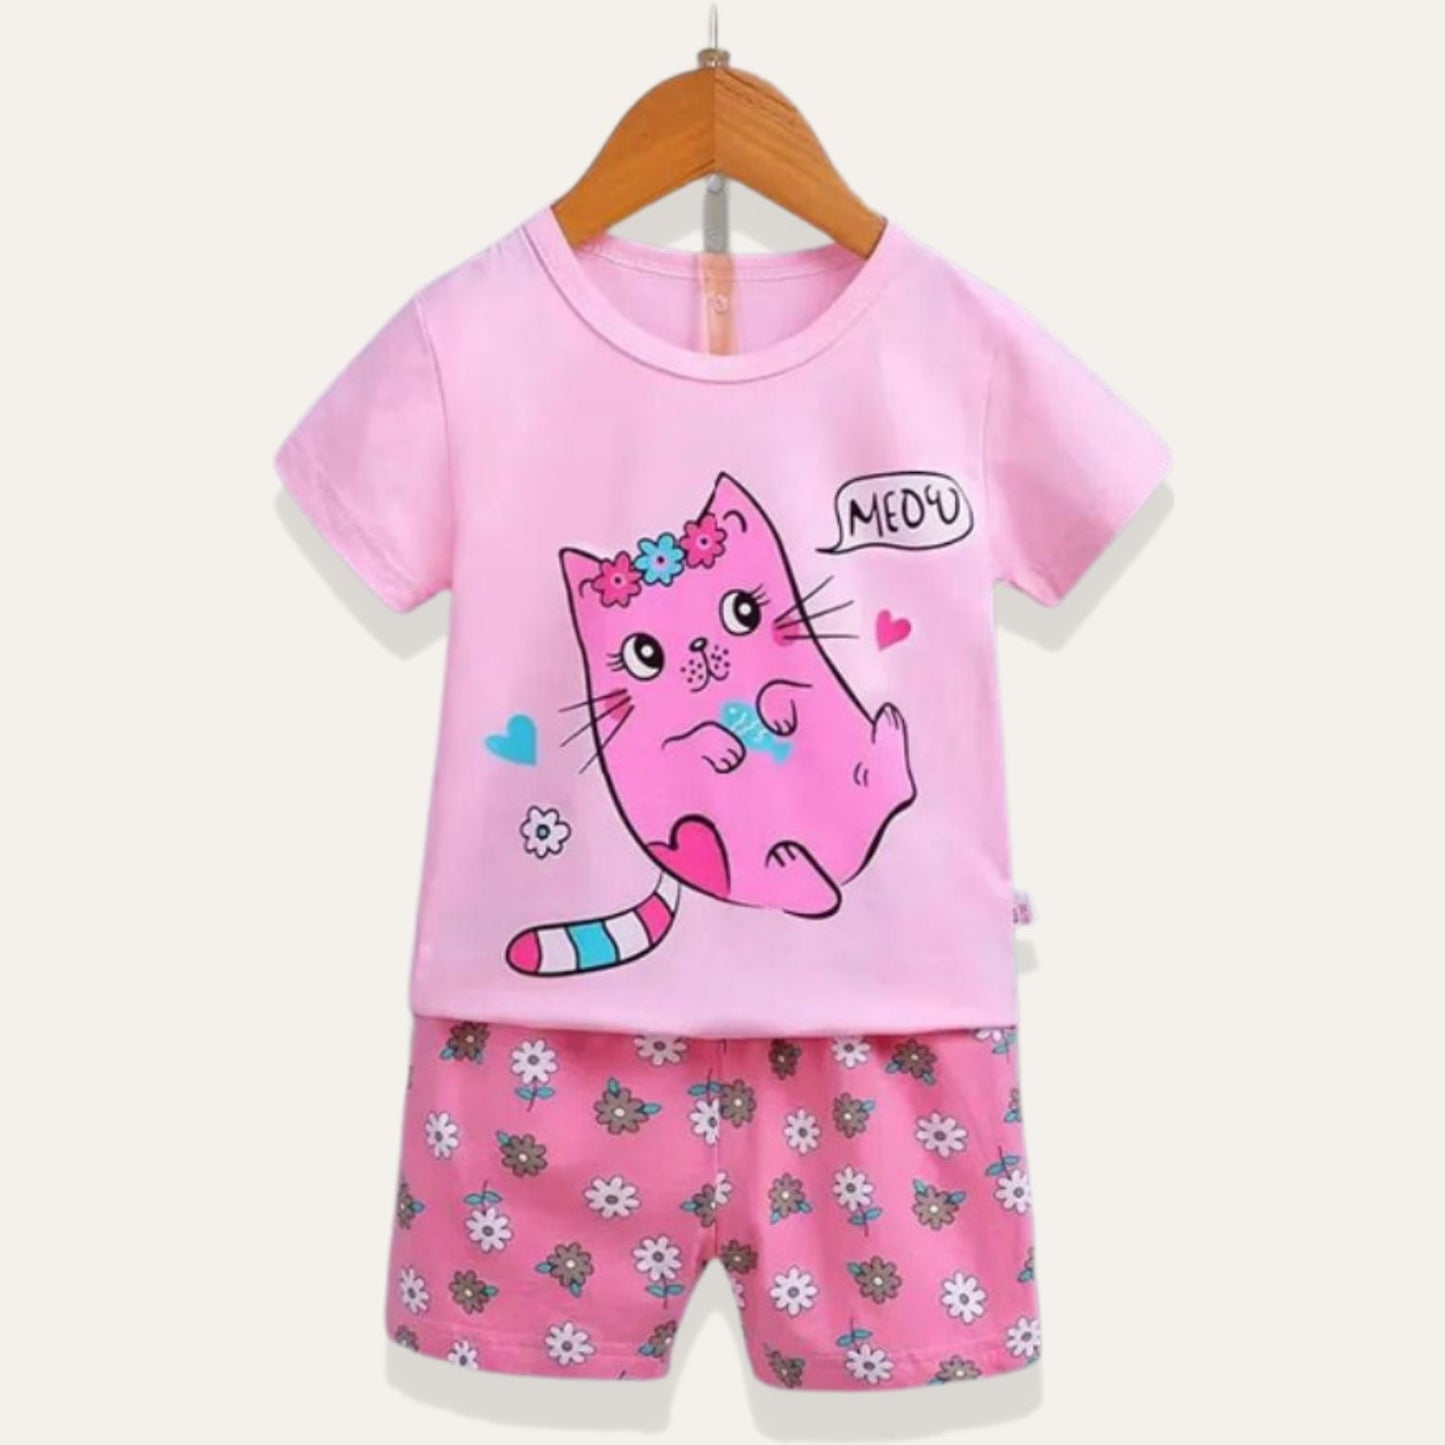 Pink Summer Fashion for Kids